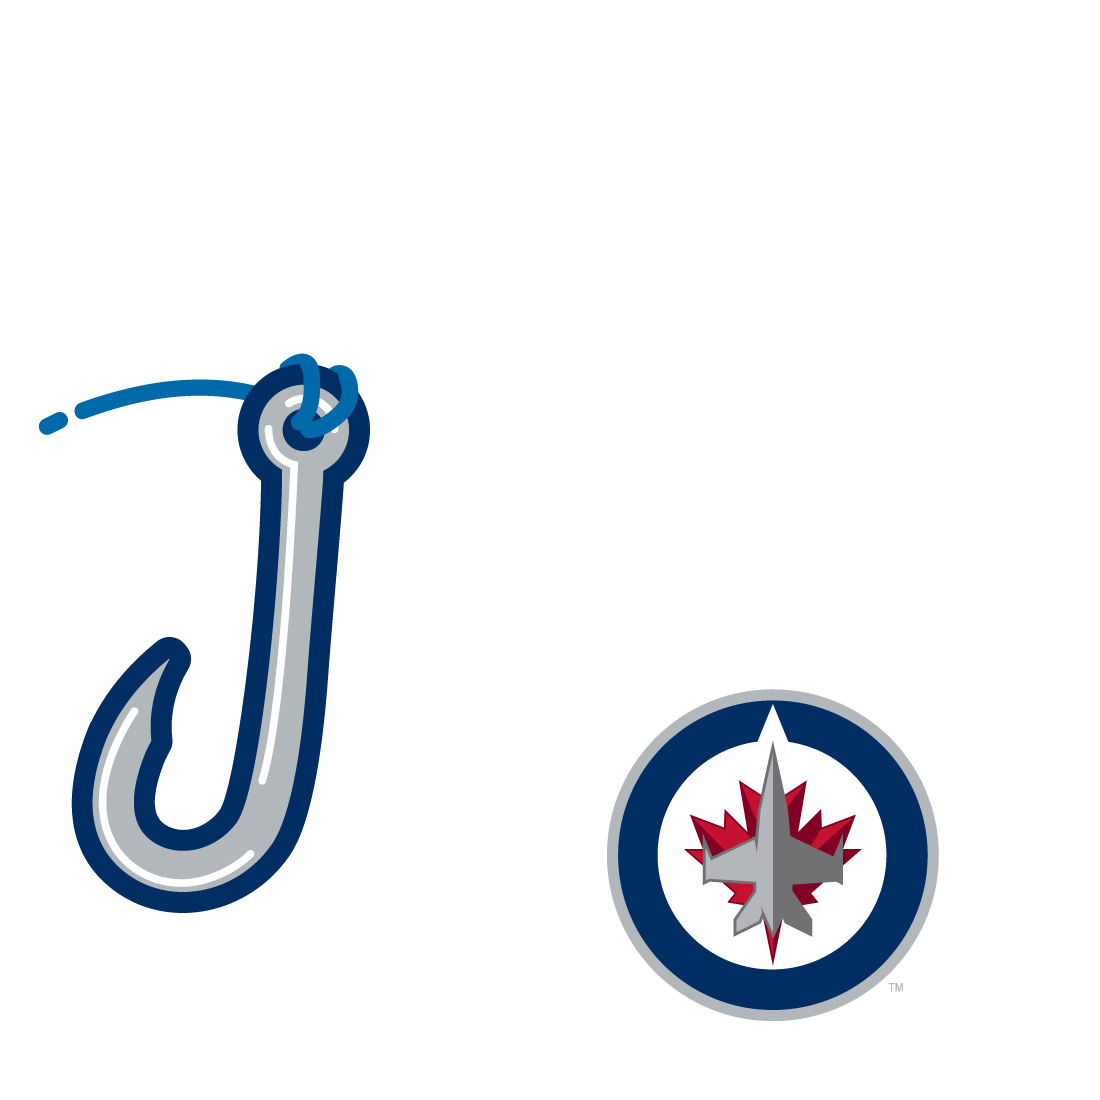 Winnipeg Jets Raffle - True North Youth Foundation